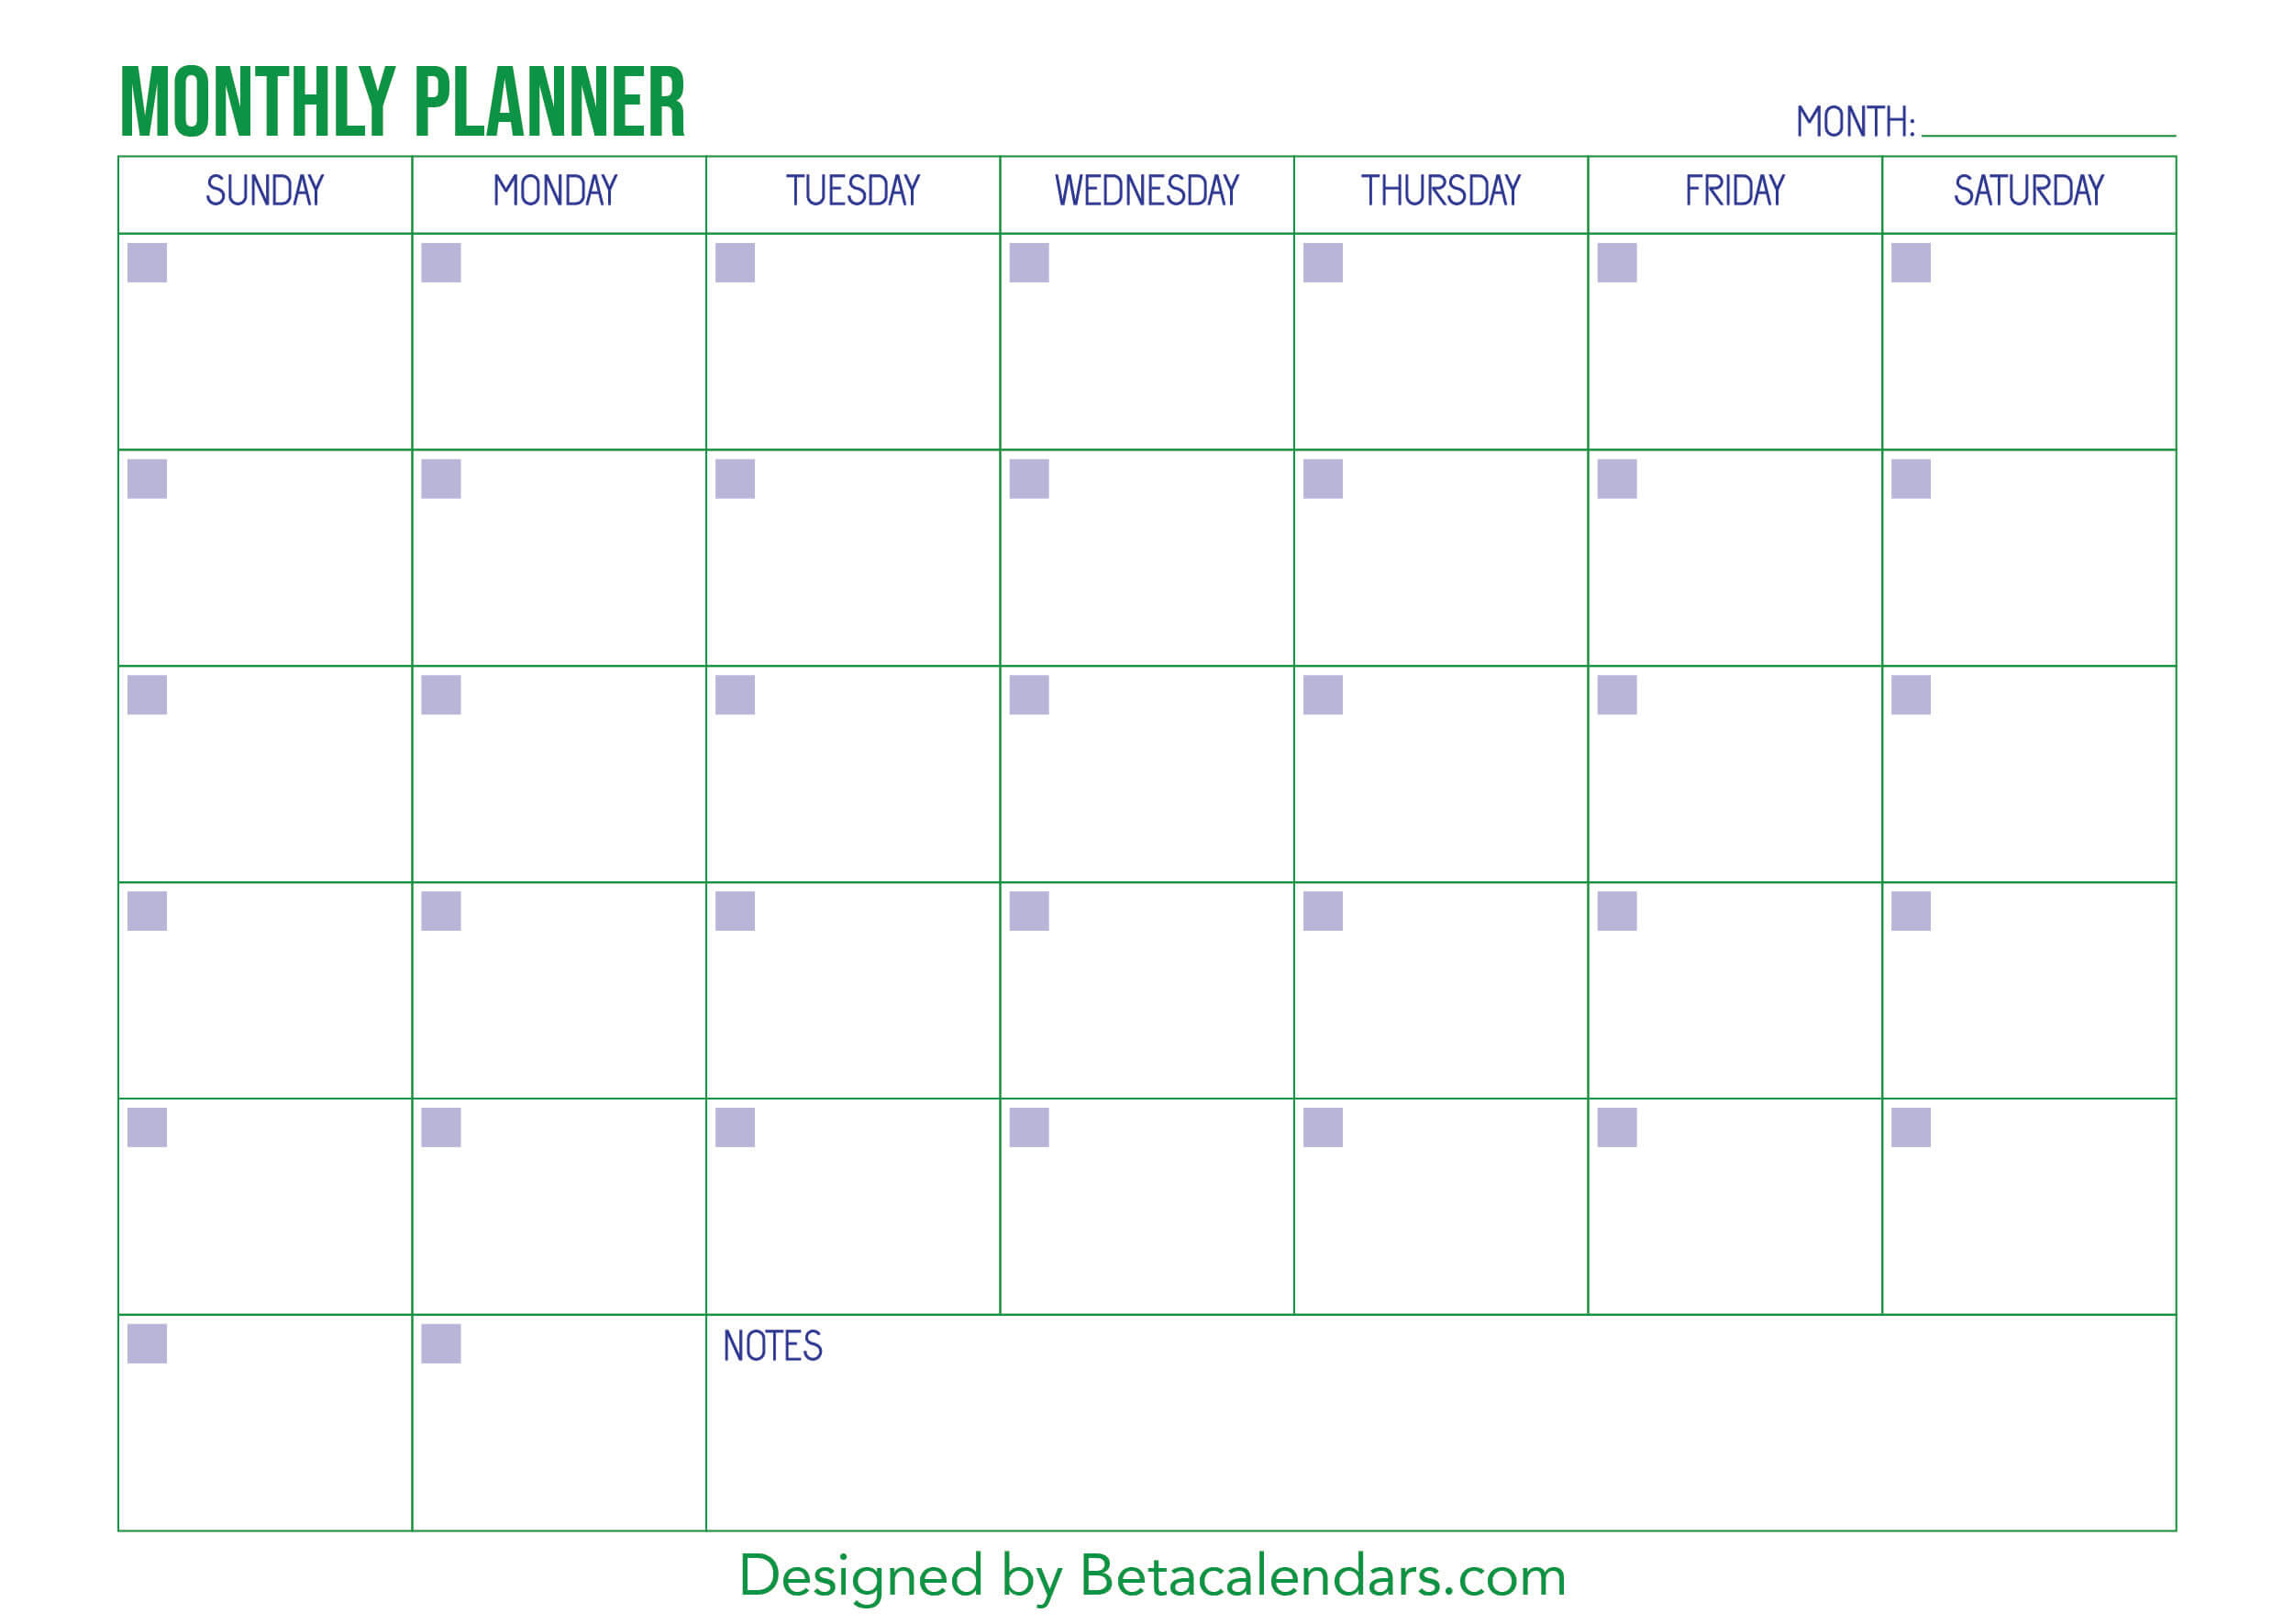 Free Printable Monthly Planner - Beta Calendars